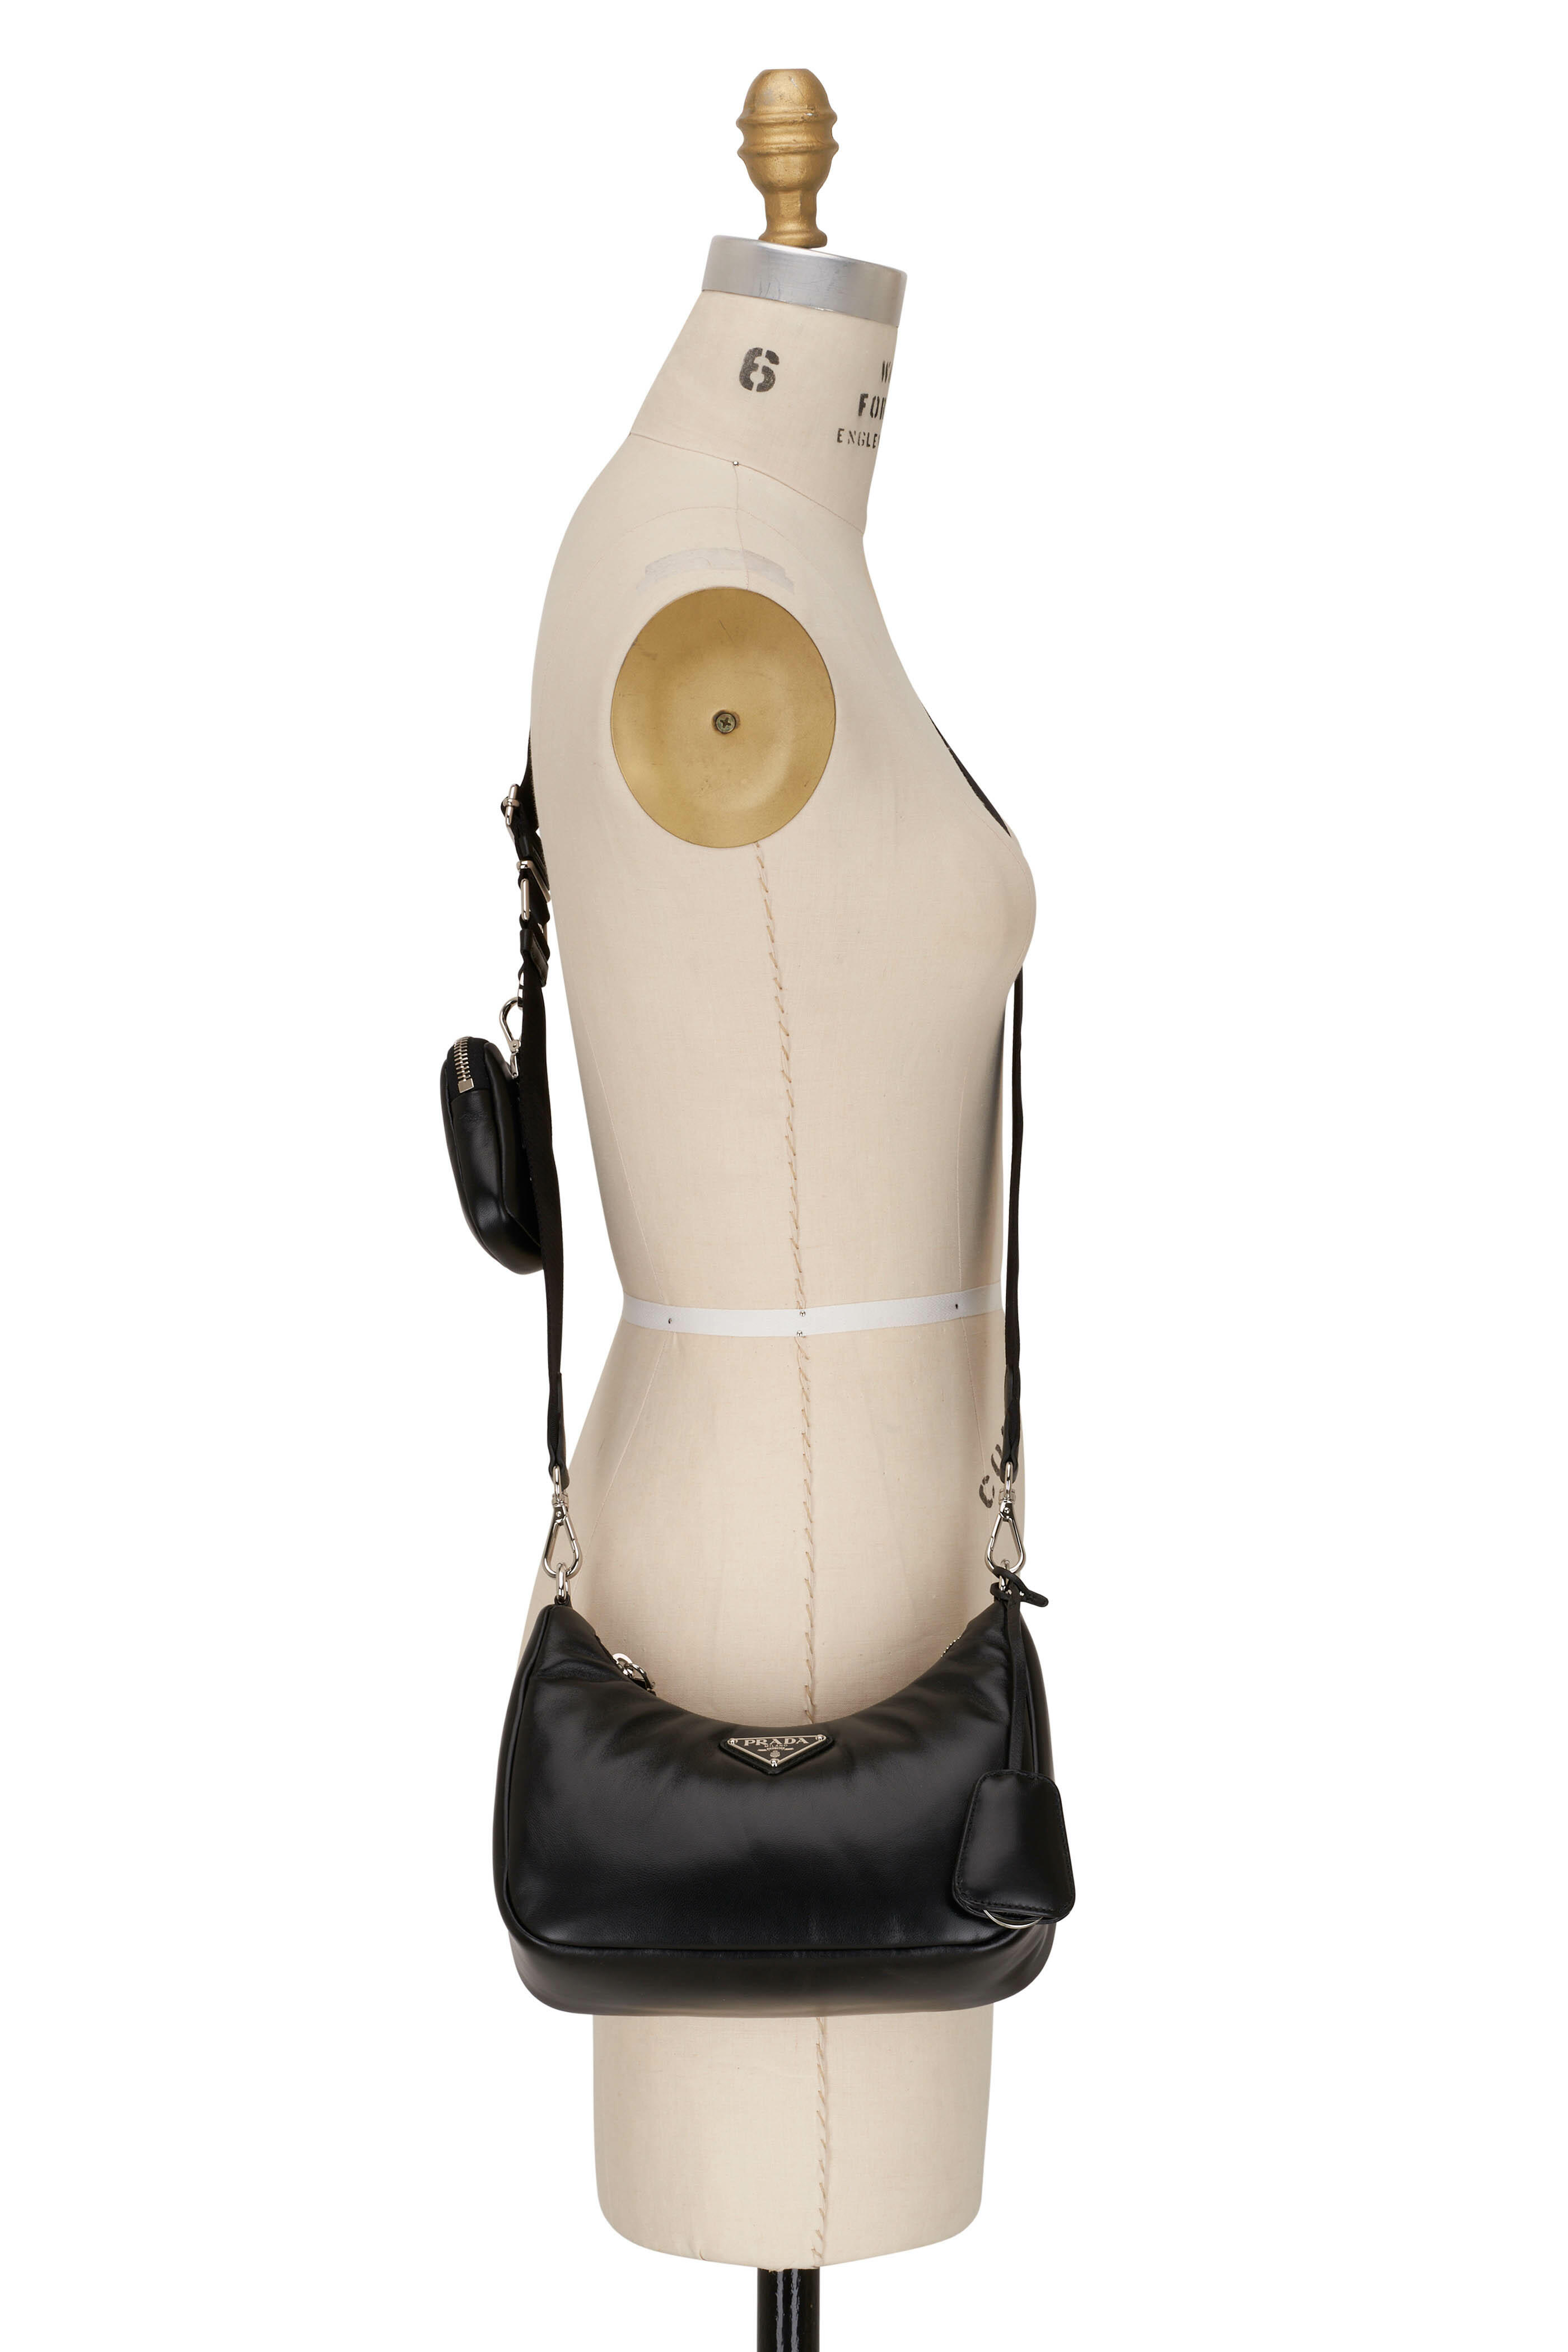 Padded nappa-leather Prada Re-Edition 2005 shoulder bag